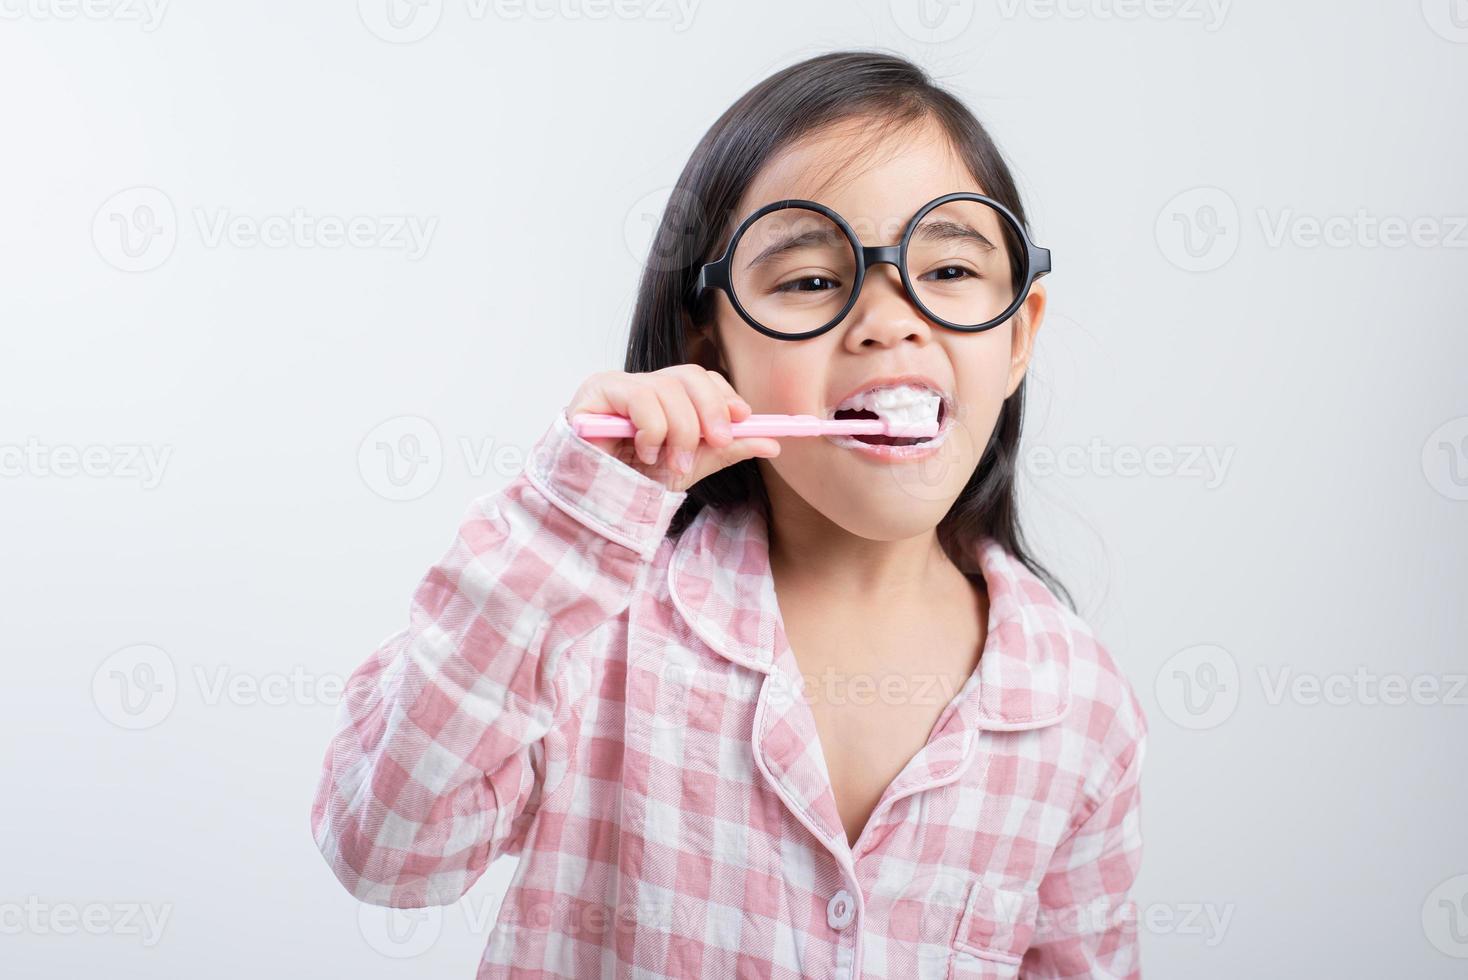 little girl Asia brushing teeth happily white background photo